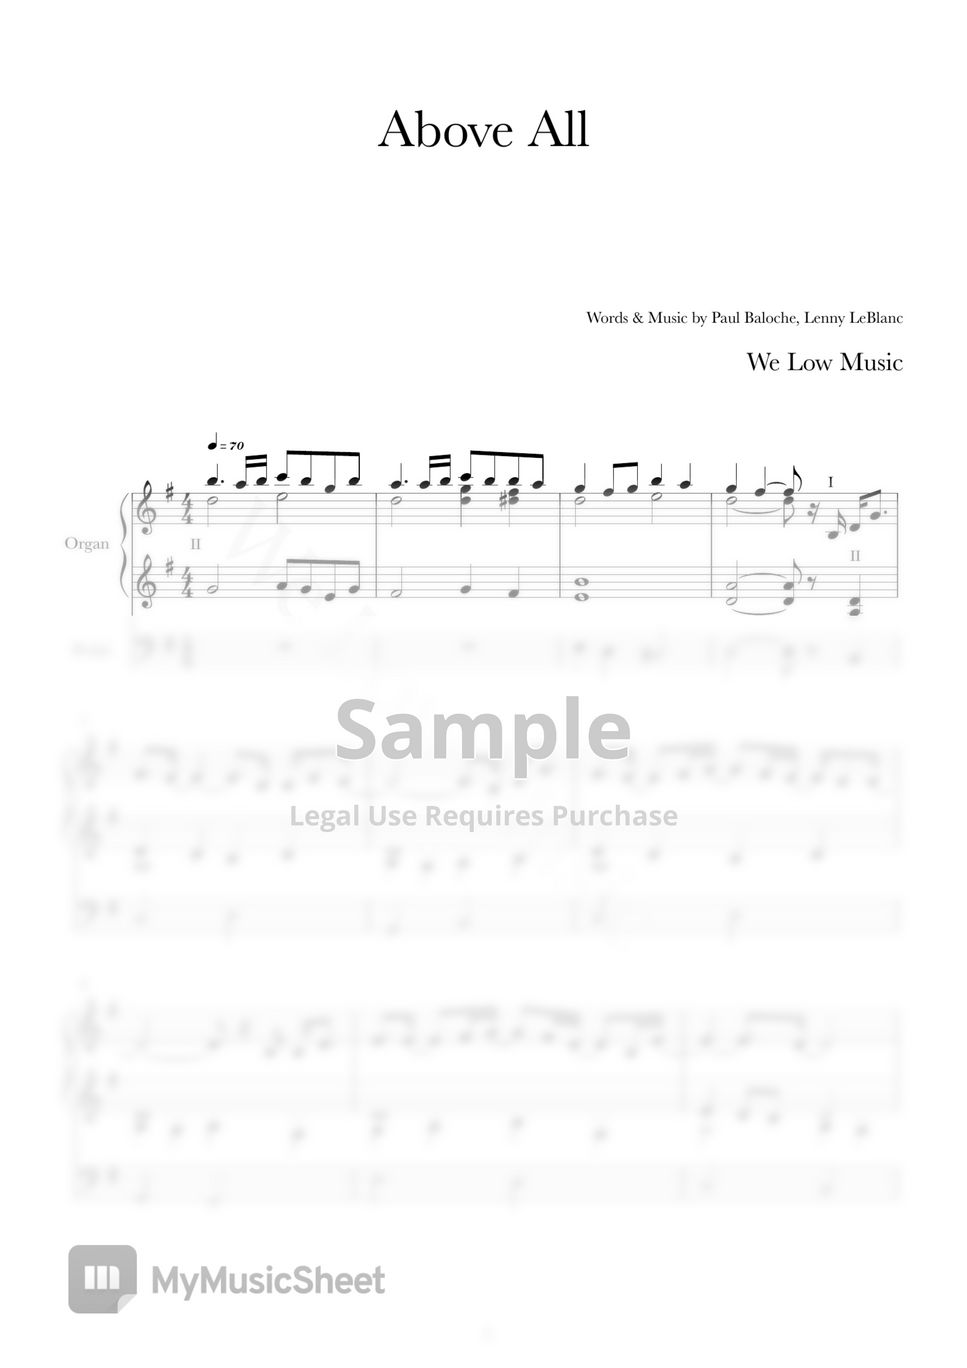 Paul Baloche, Lenny Leblanc - 모든 능력과 모든 권세 (오르간 전주/특주) by We Low Music